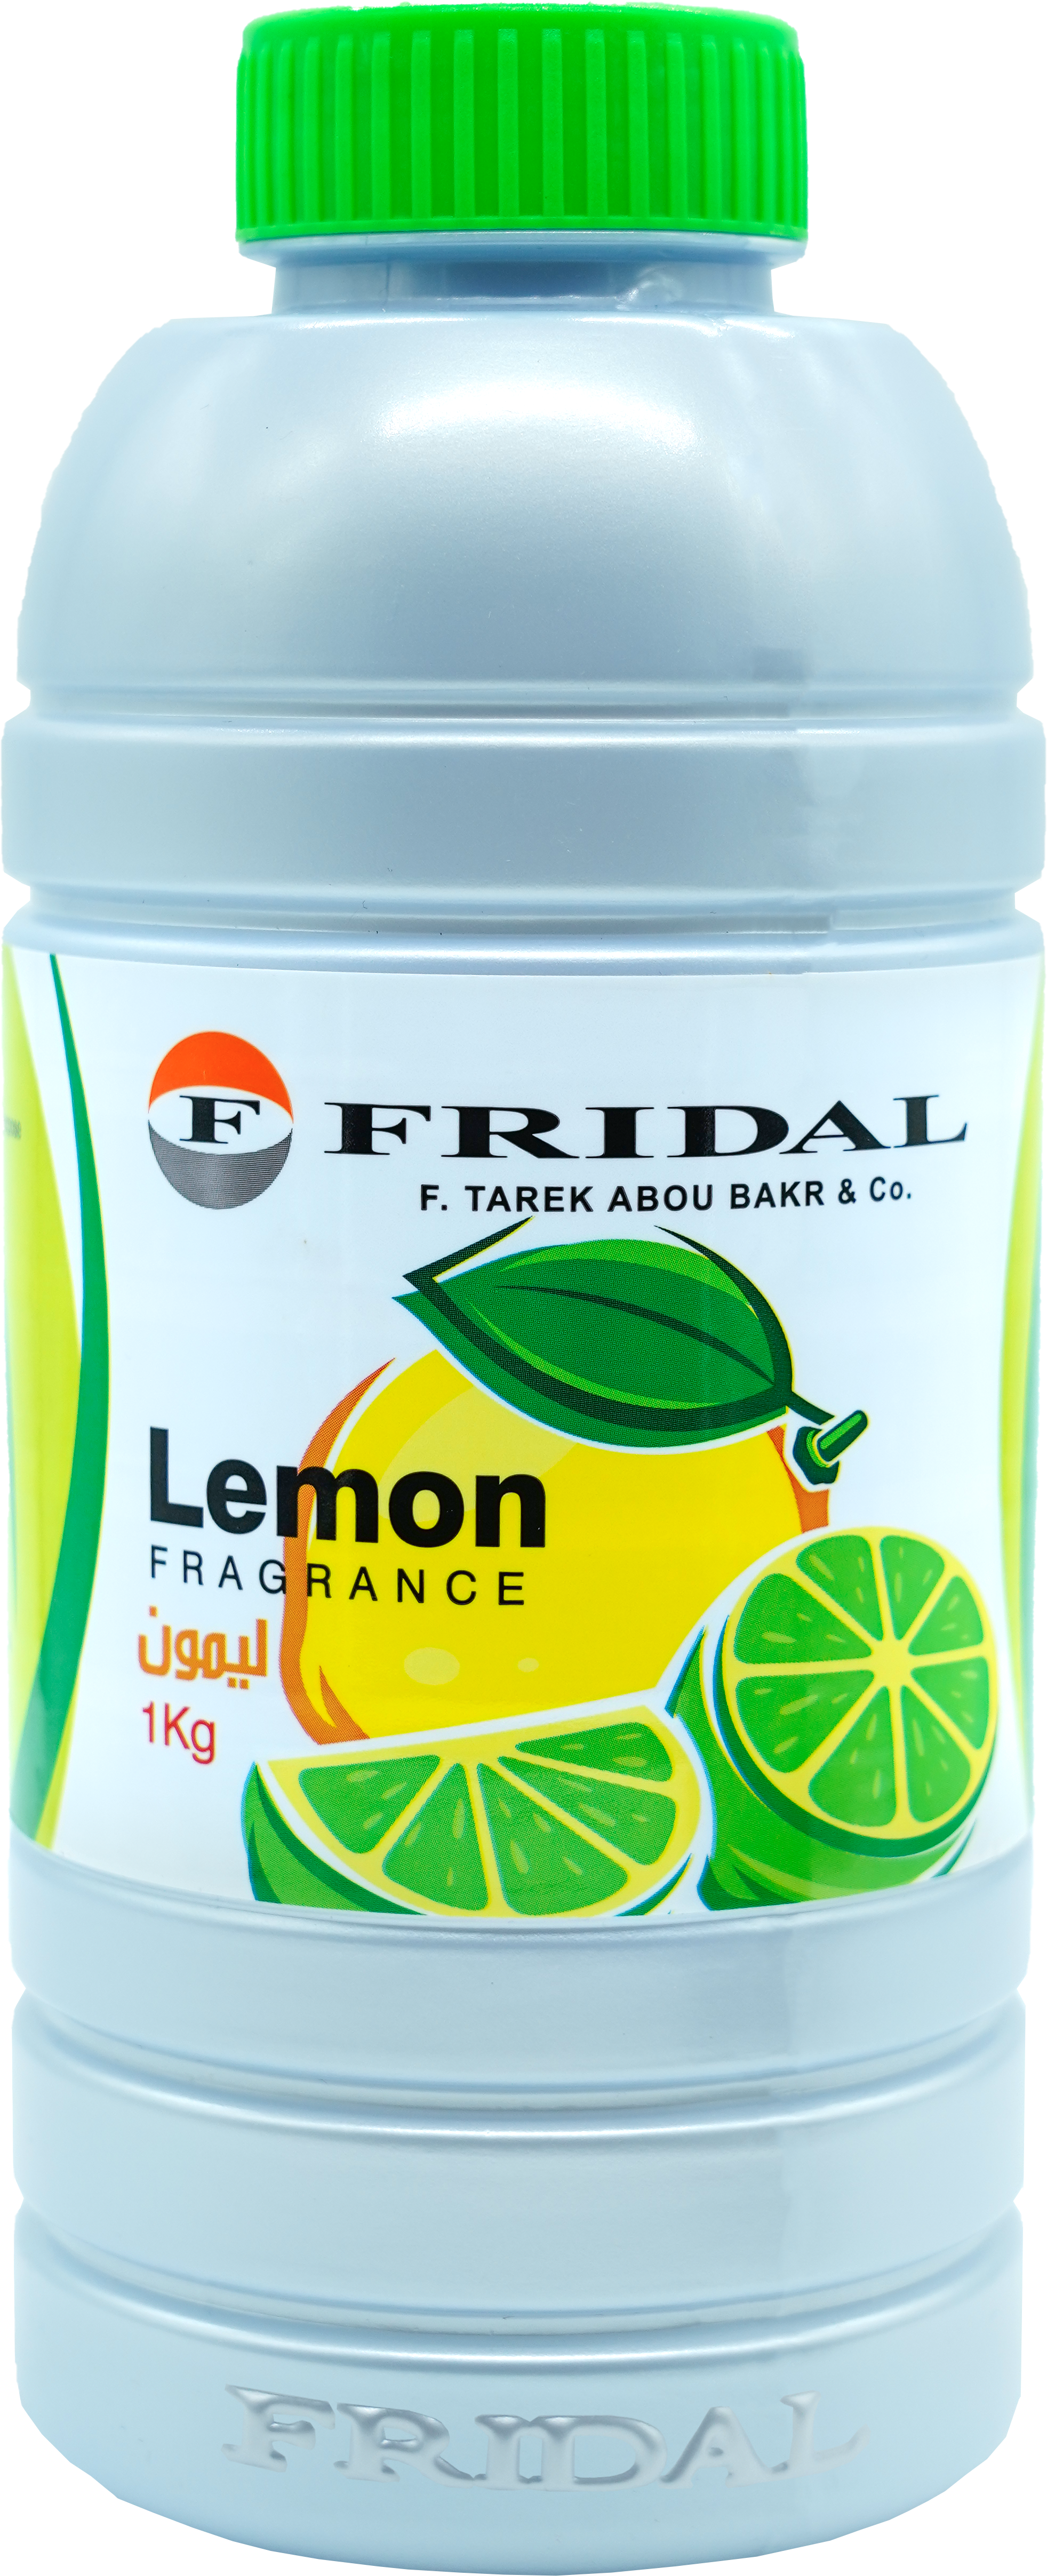 Multi-purpose usage Fragrance "Lemon 1kg"